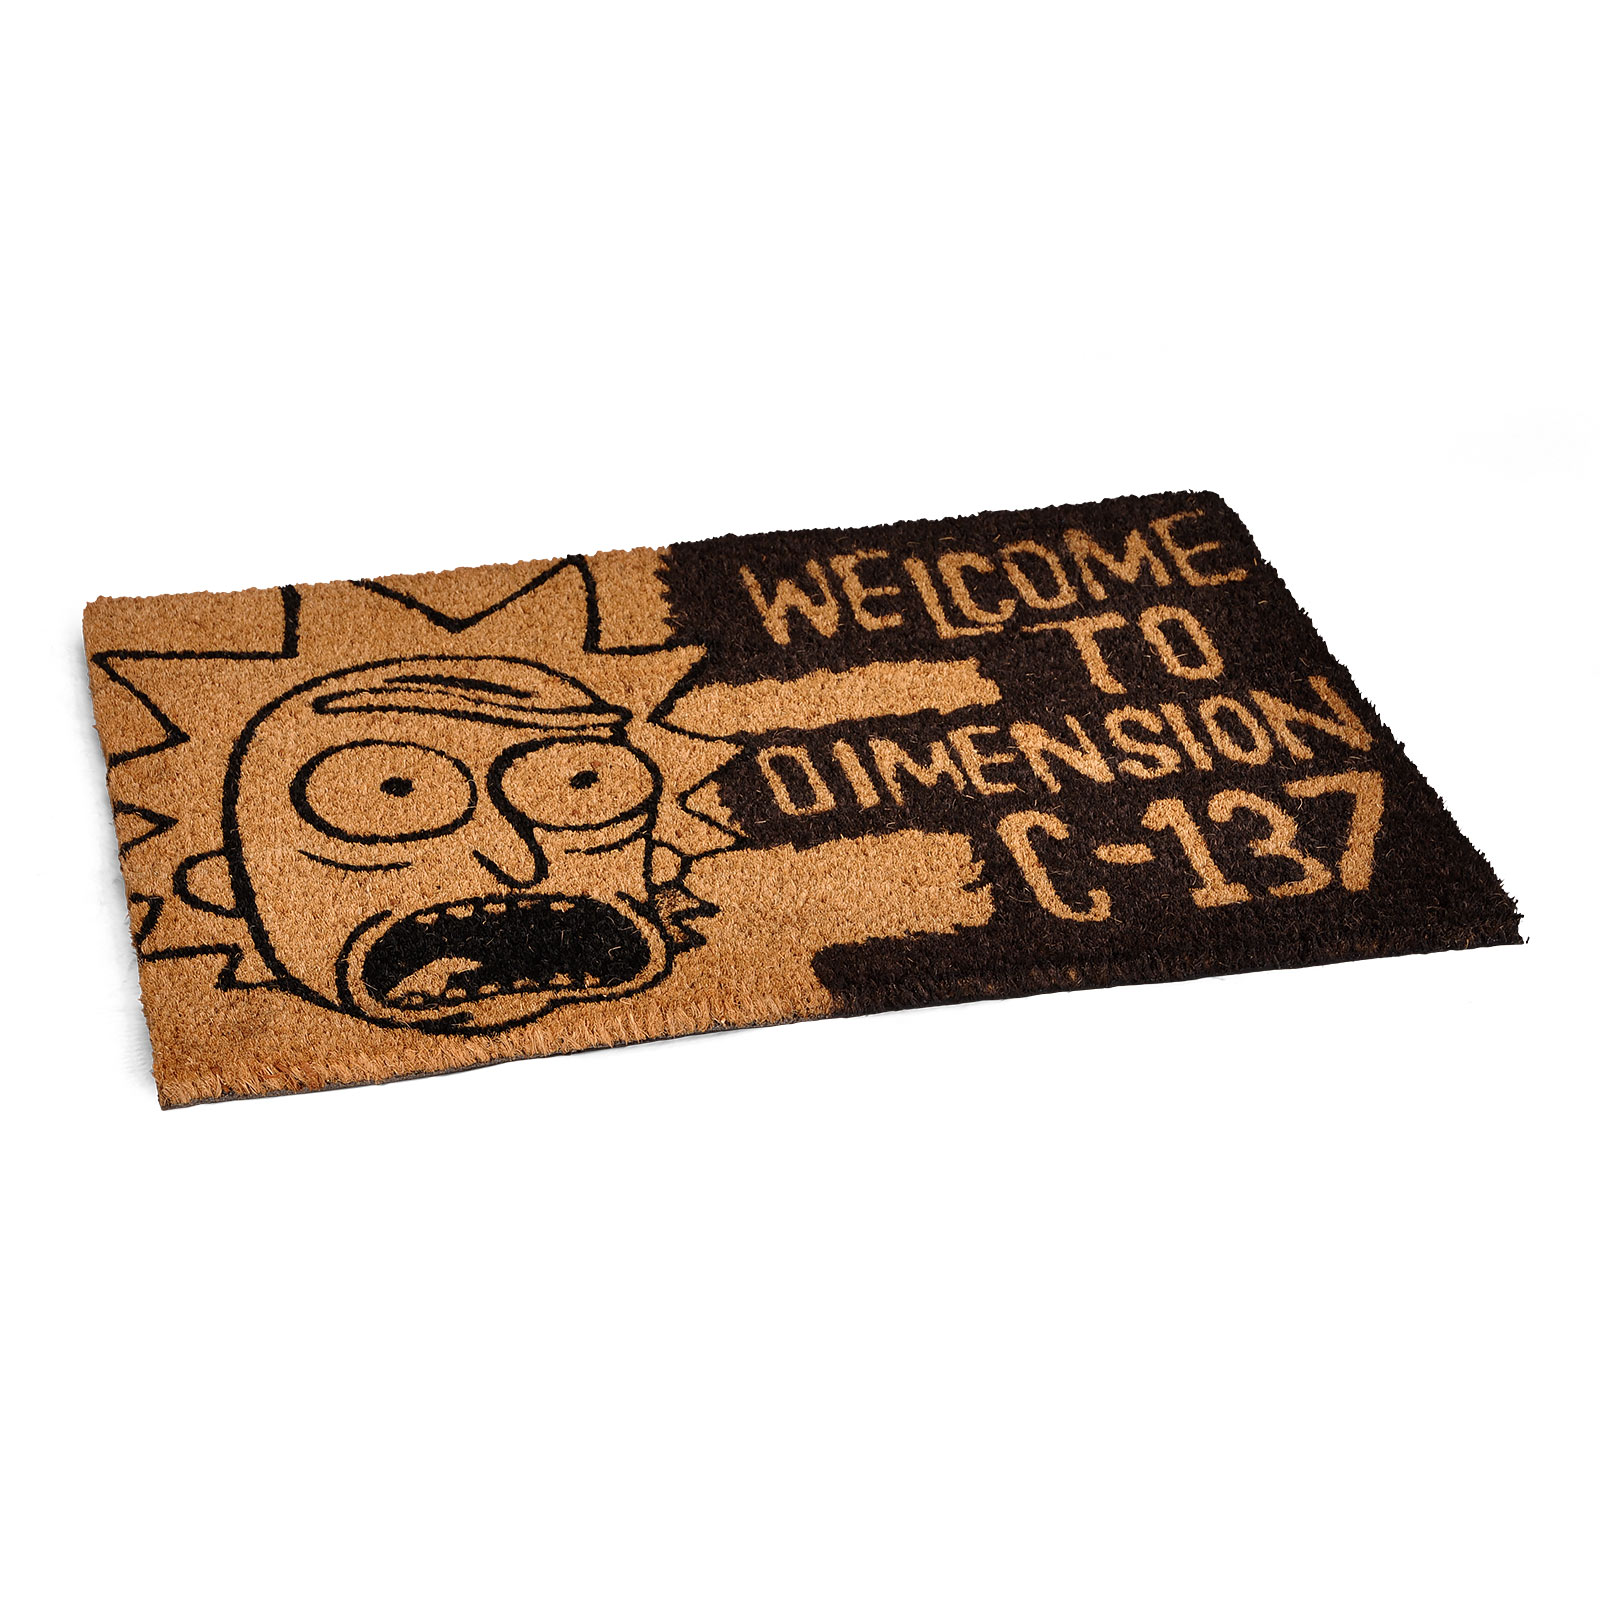 Rick and Morty - Dimension C-137 Doormat